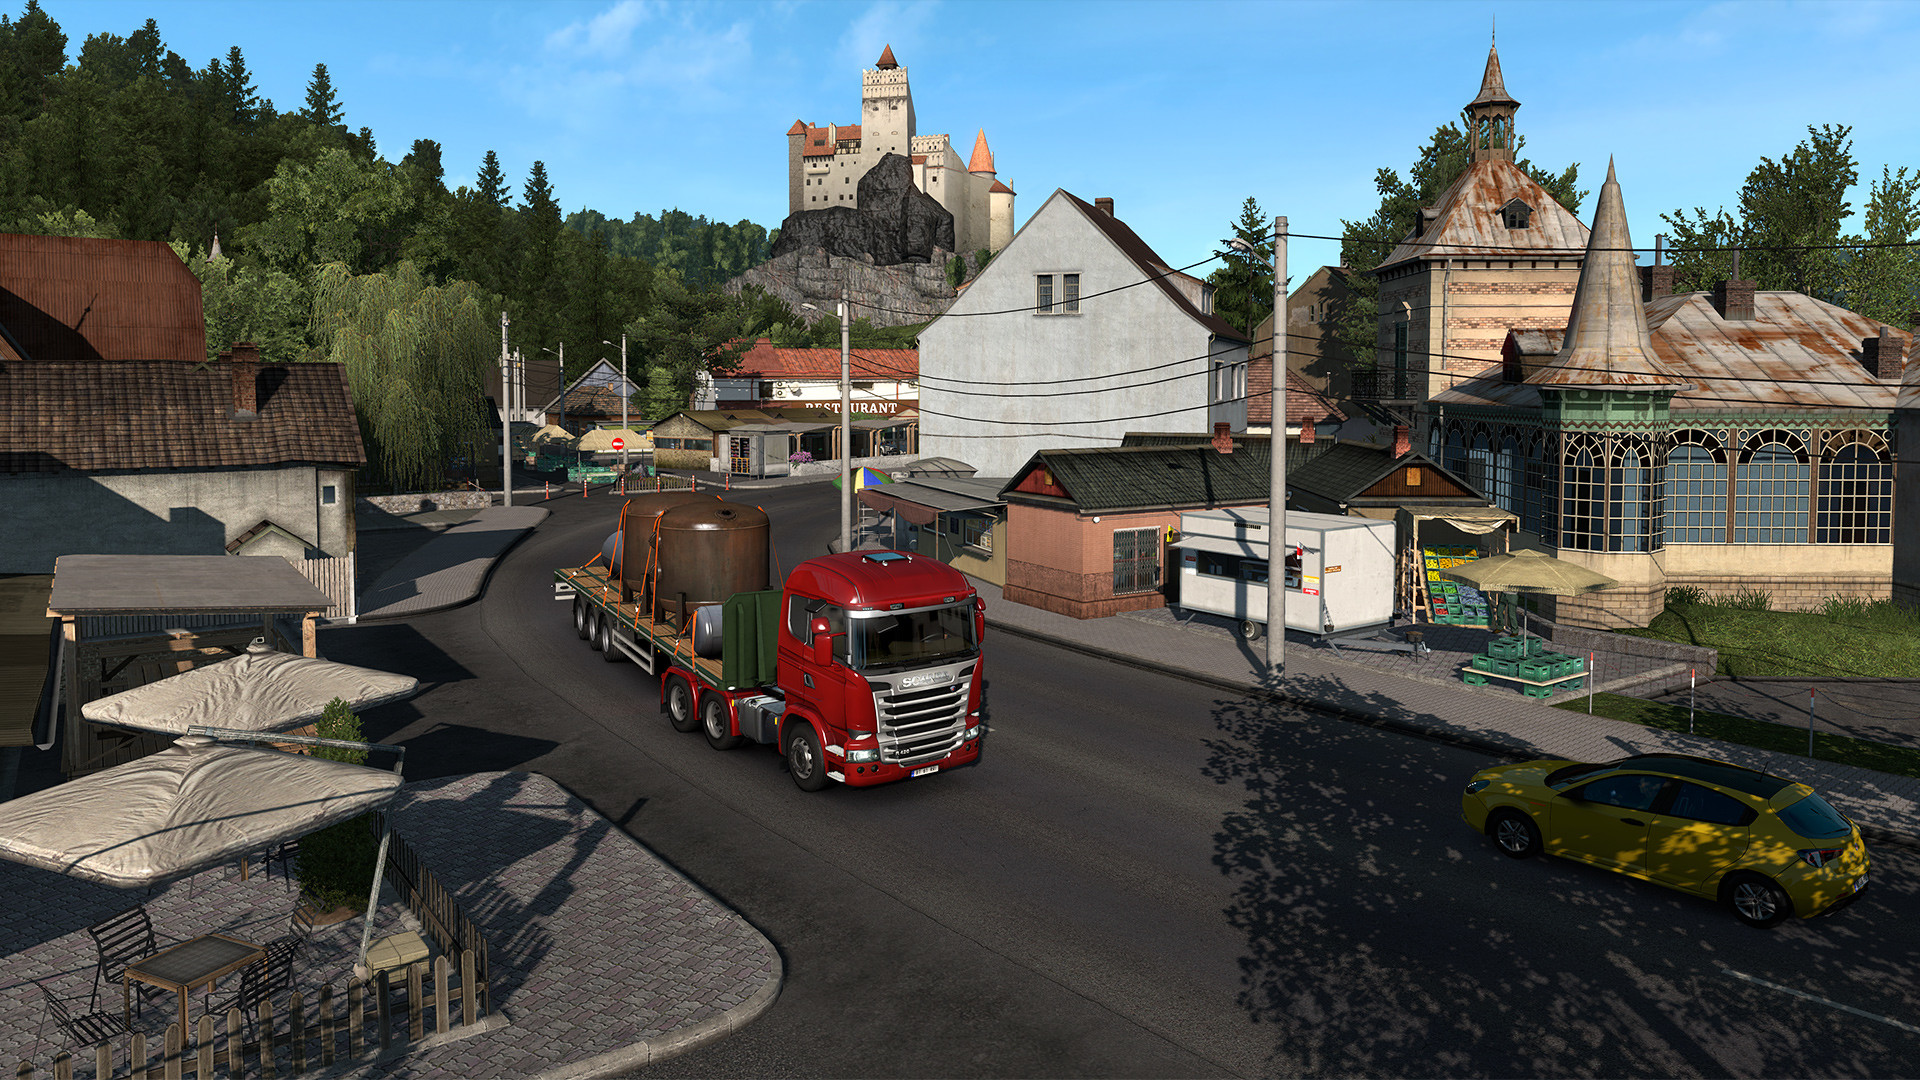 euro truck simulator 2 2019